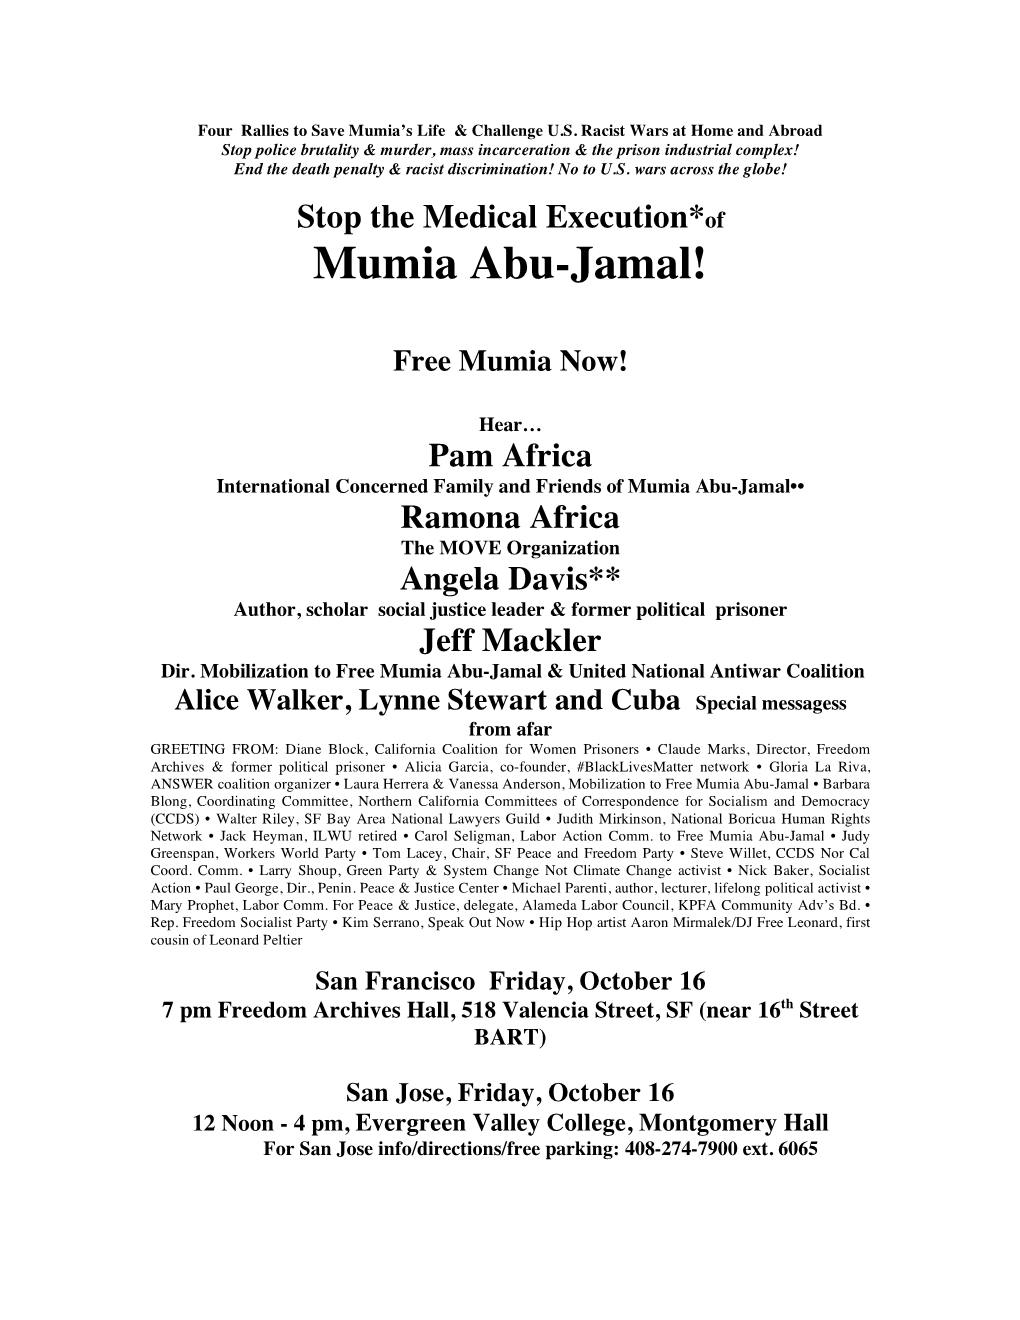 Stop the Medical Execution*Of Mumia Abu-Jamal!